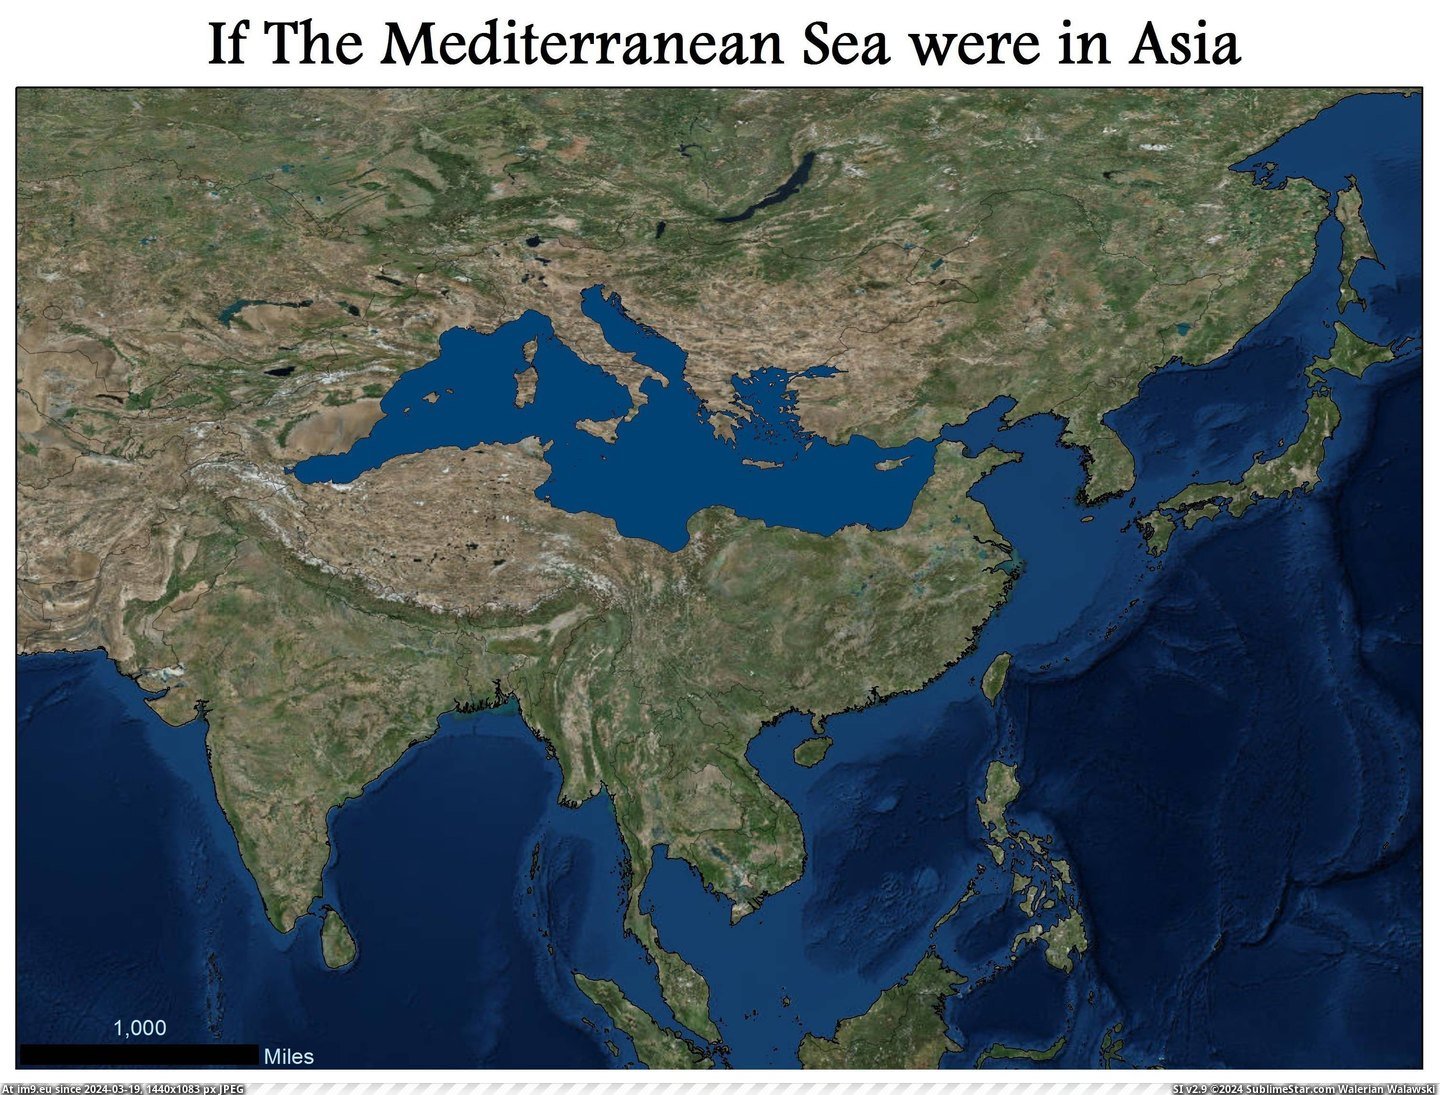 #Sea #Mediterranean #Asia [Mapporn] If the Mediterranean Sea were in Asia [3014x2279] Pic. (Obraz z album My r/MAPS favs))